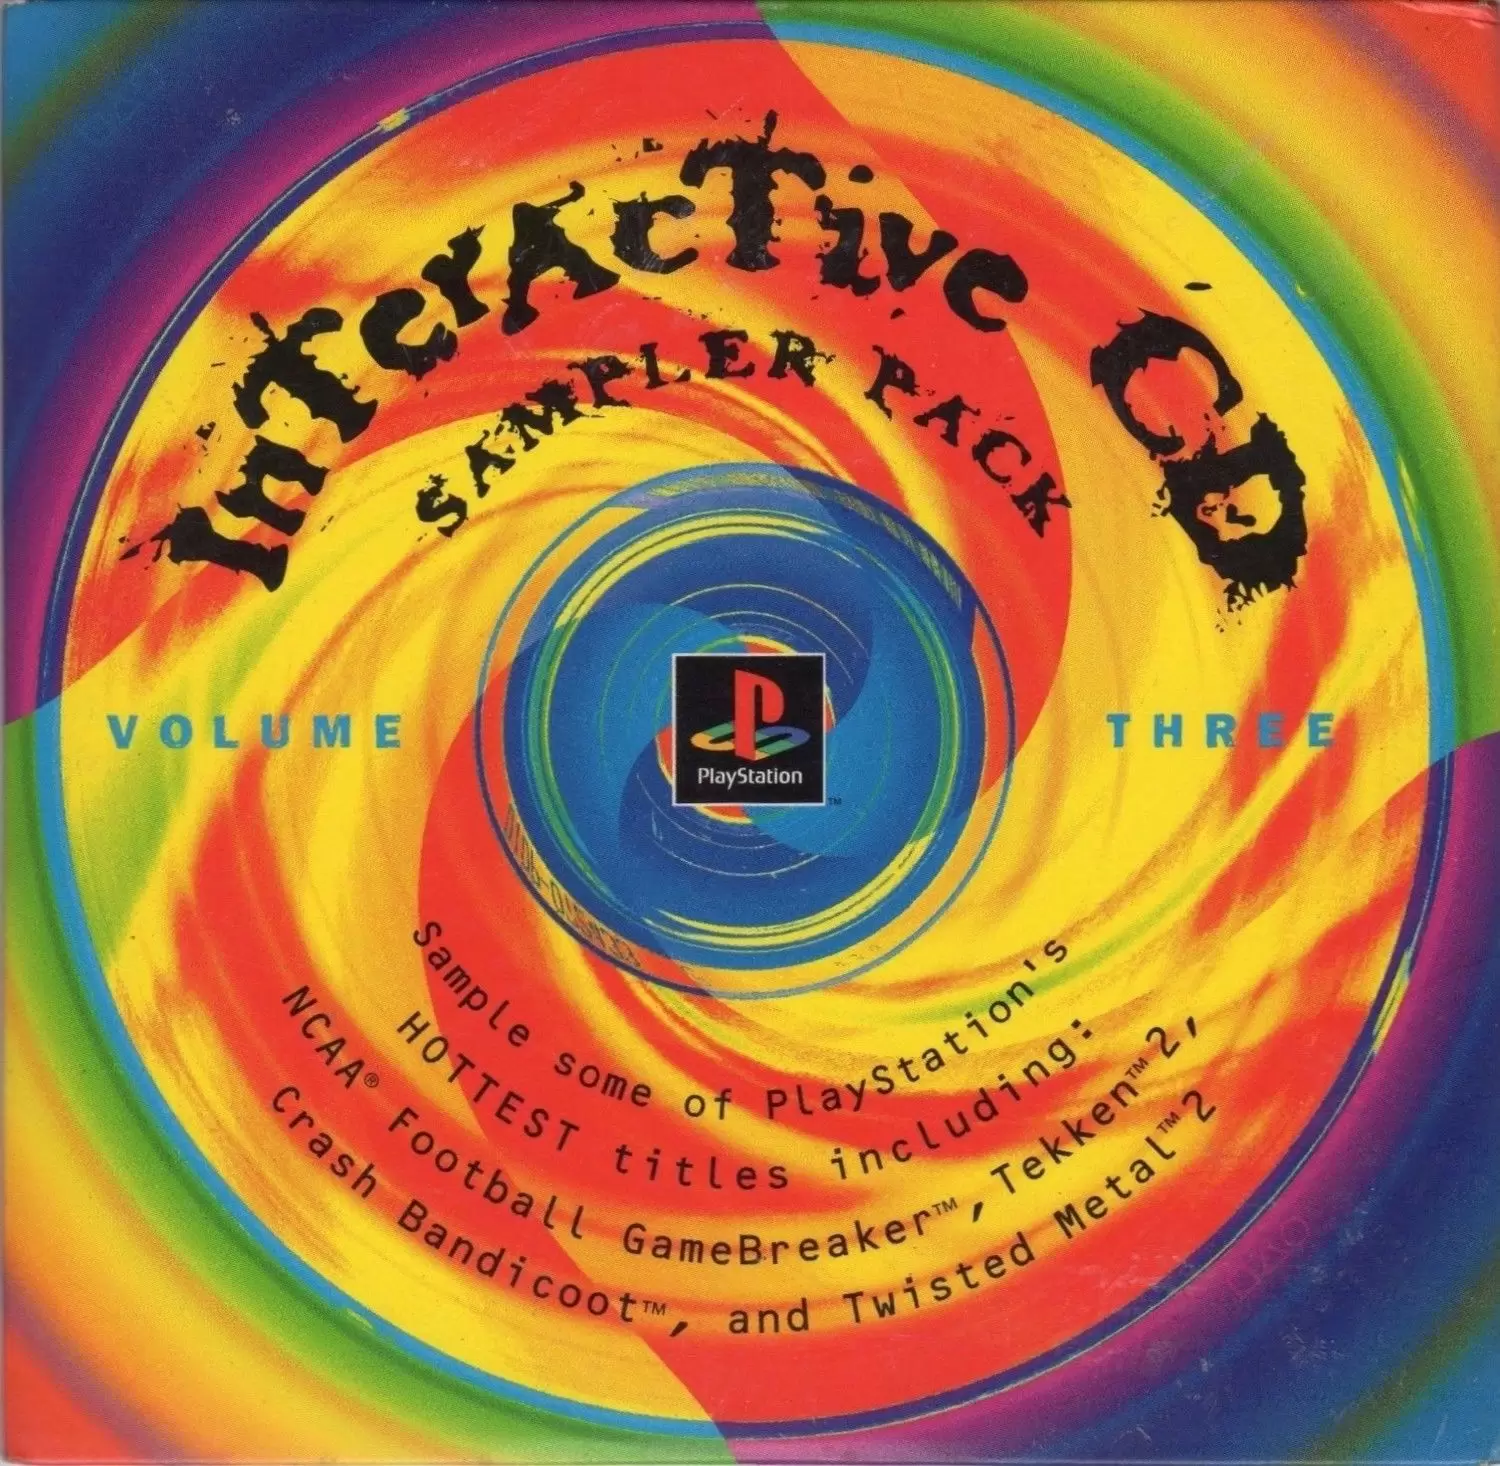 Playstation games - Interactive CD Sampler Pack Volume 3